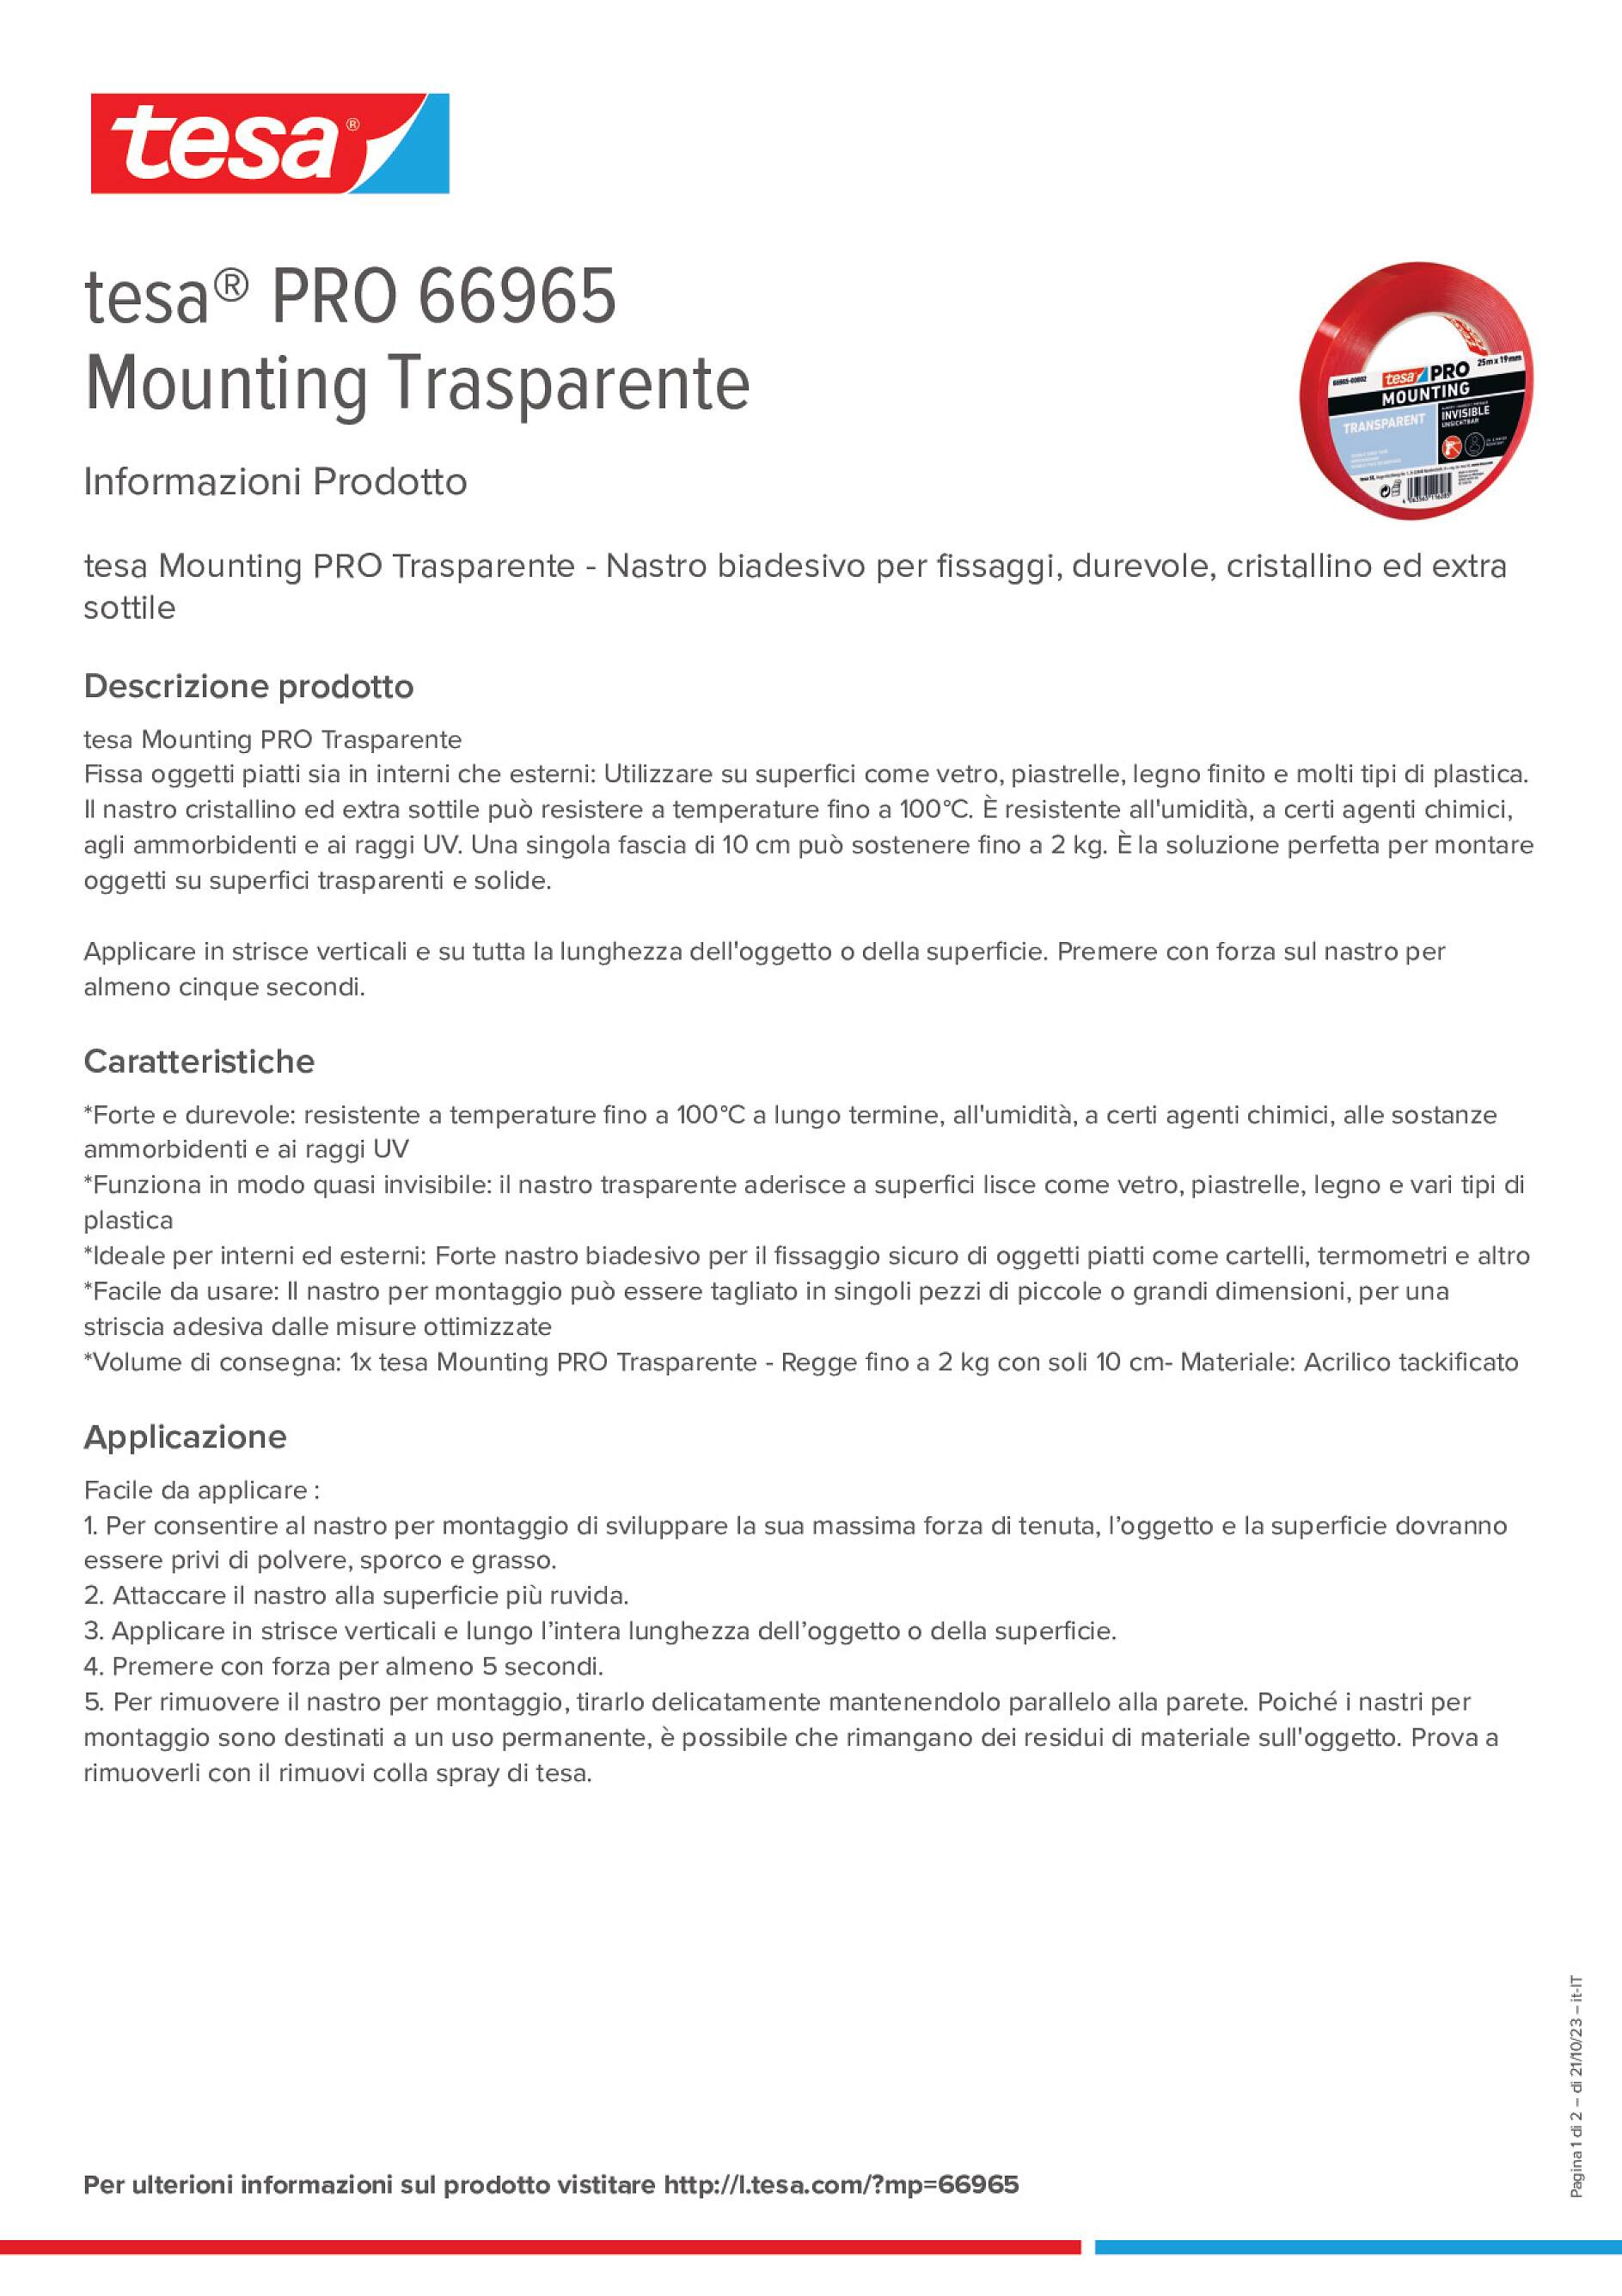 tesa® PRO 66965 Mounting Trasparente - tesa